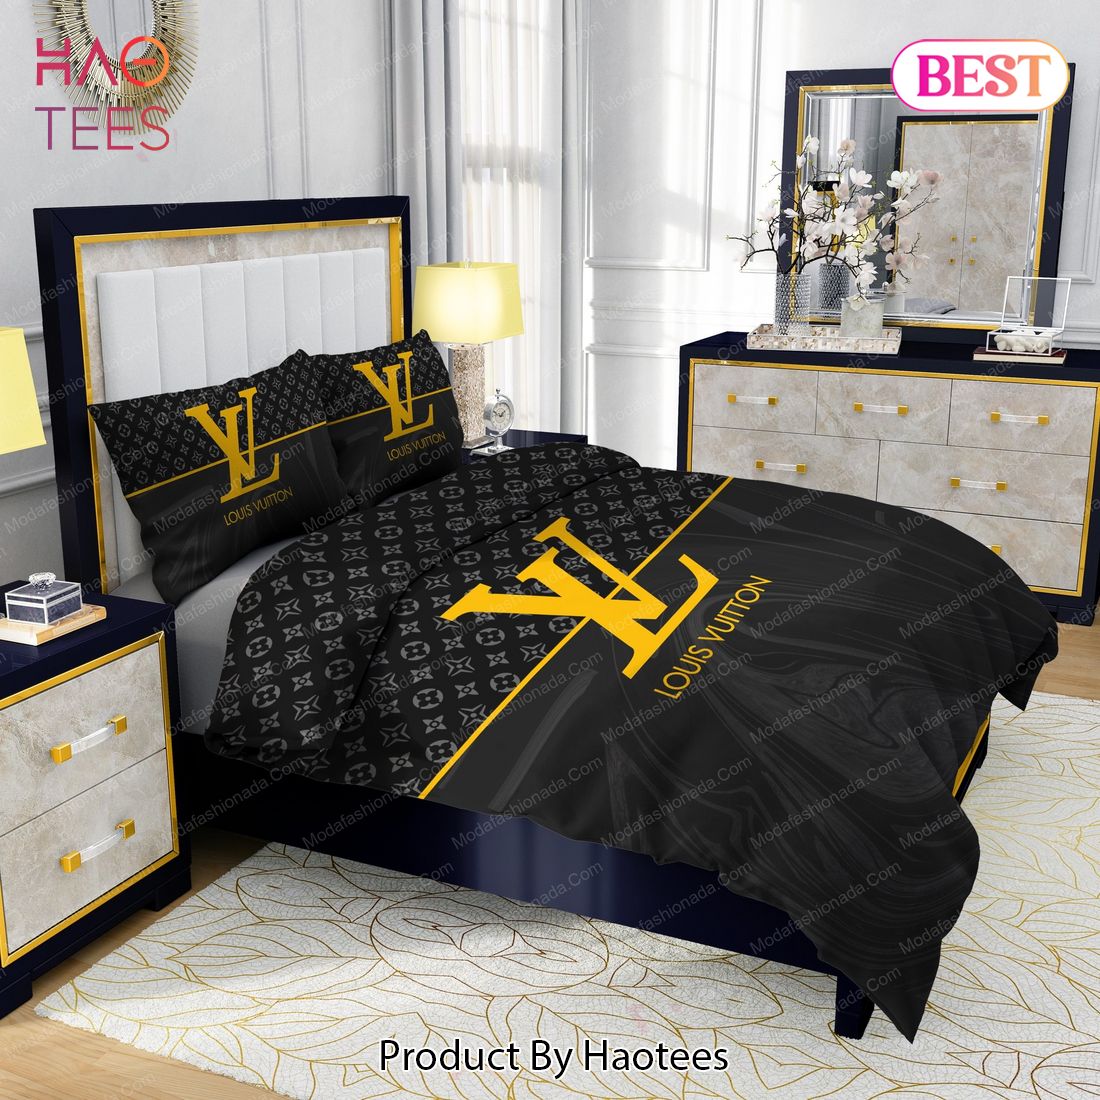 SALE] Louis Vuitton Black Gold Luxury Brand High-End Bedding Set